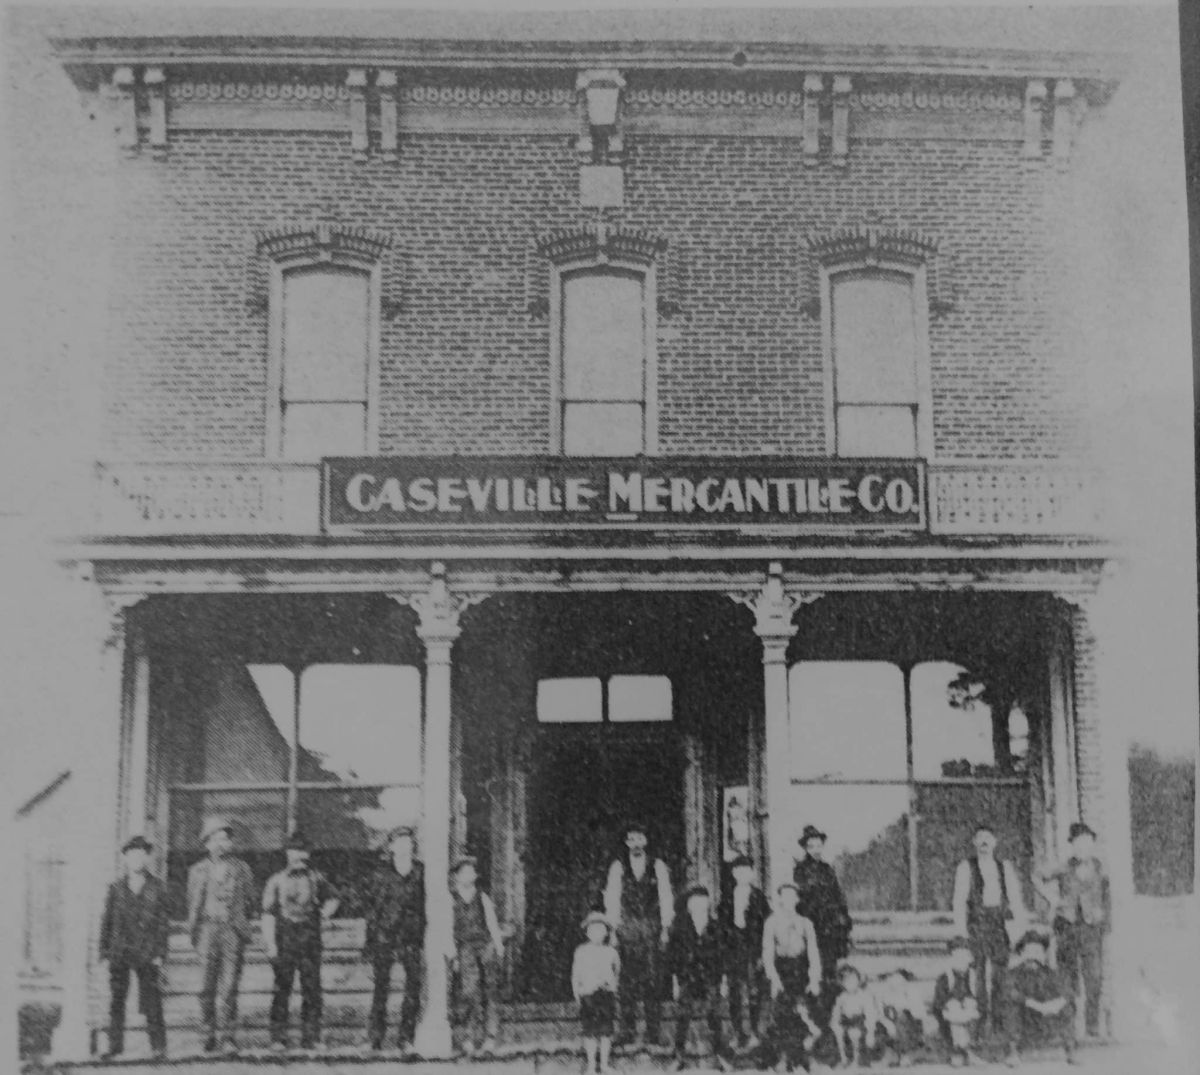 The Mystery of Caseville Mercantile Co. – An 1800s Social Platform